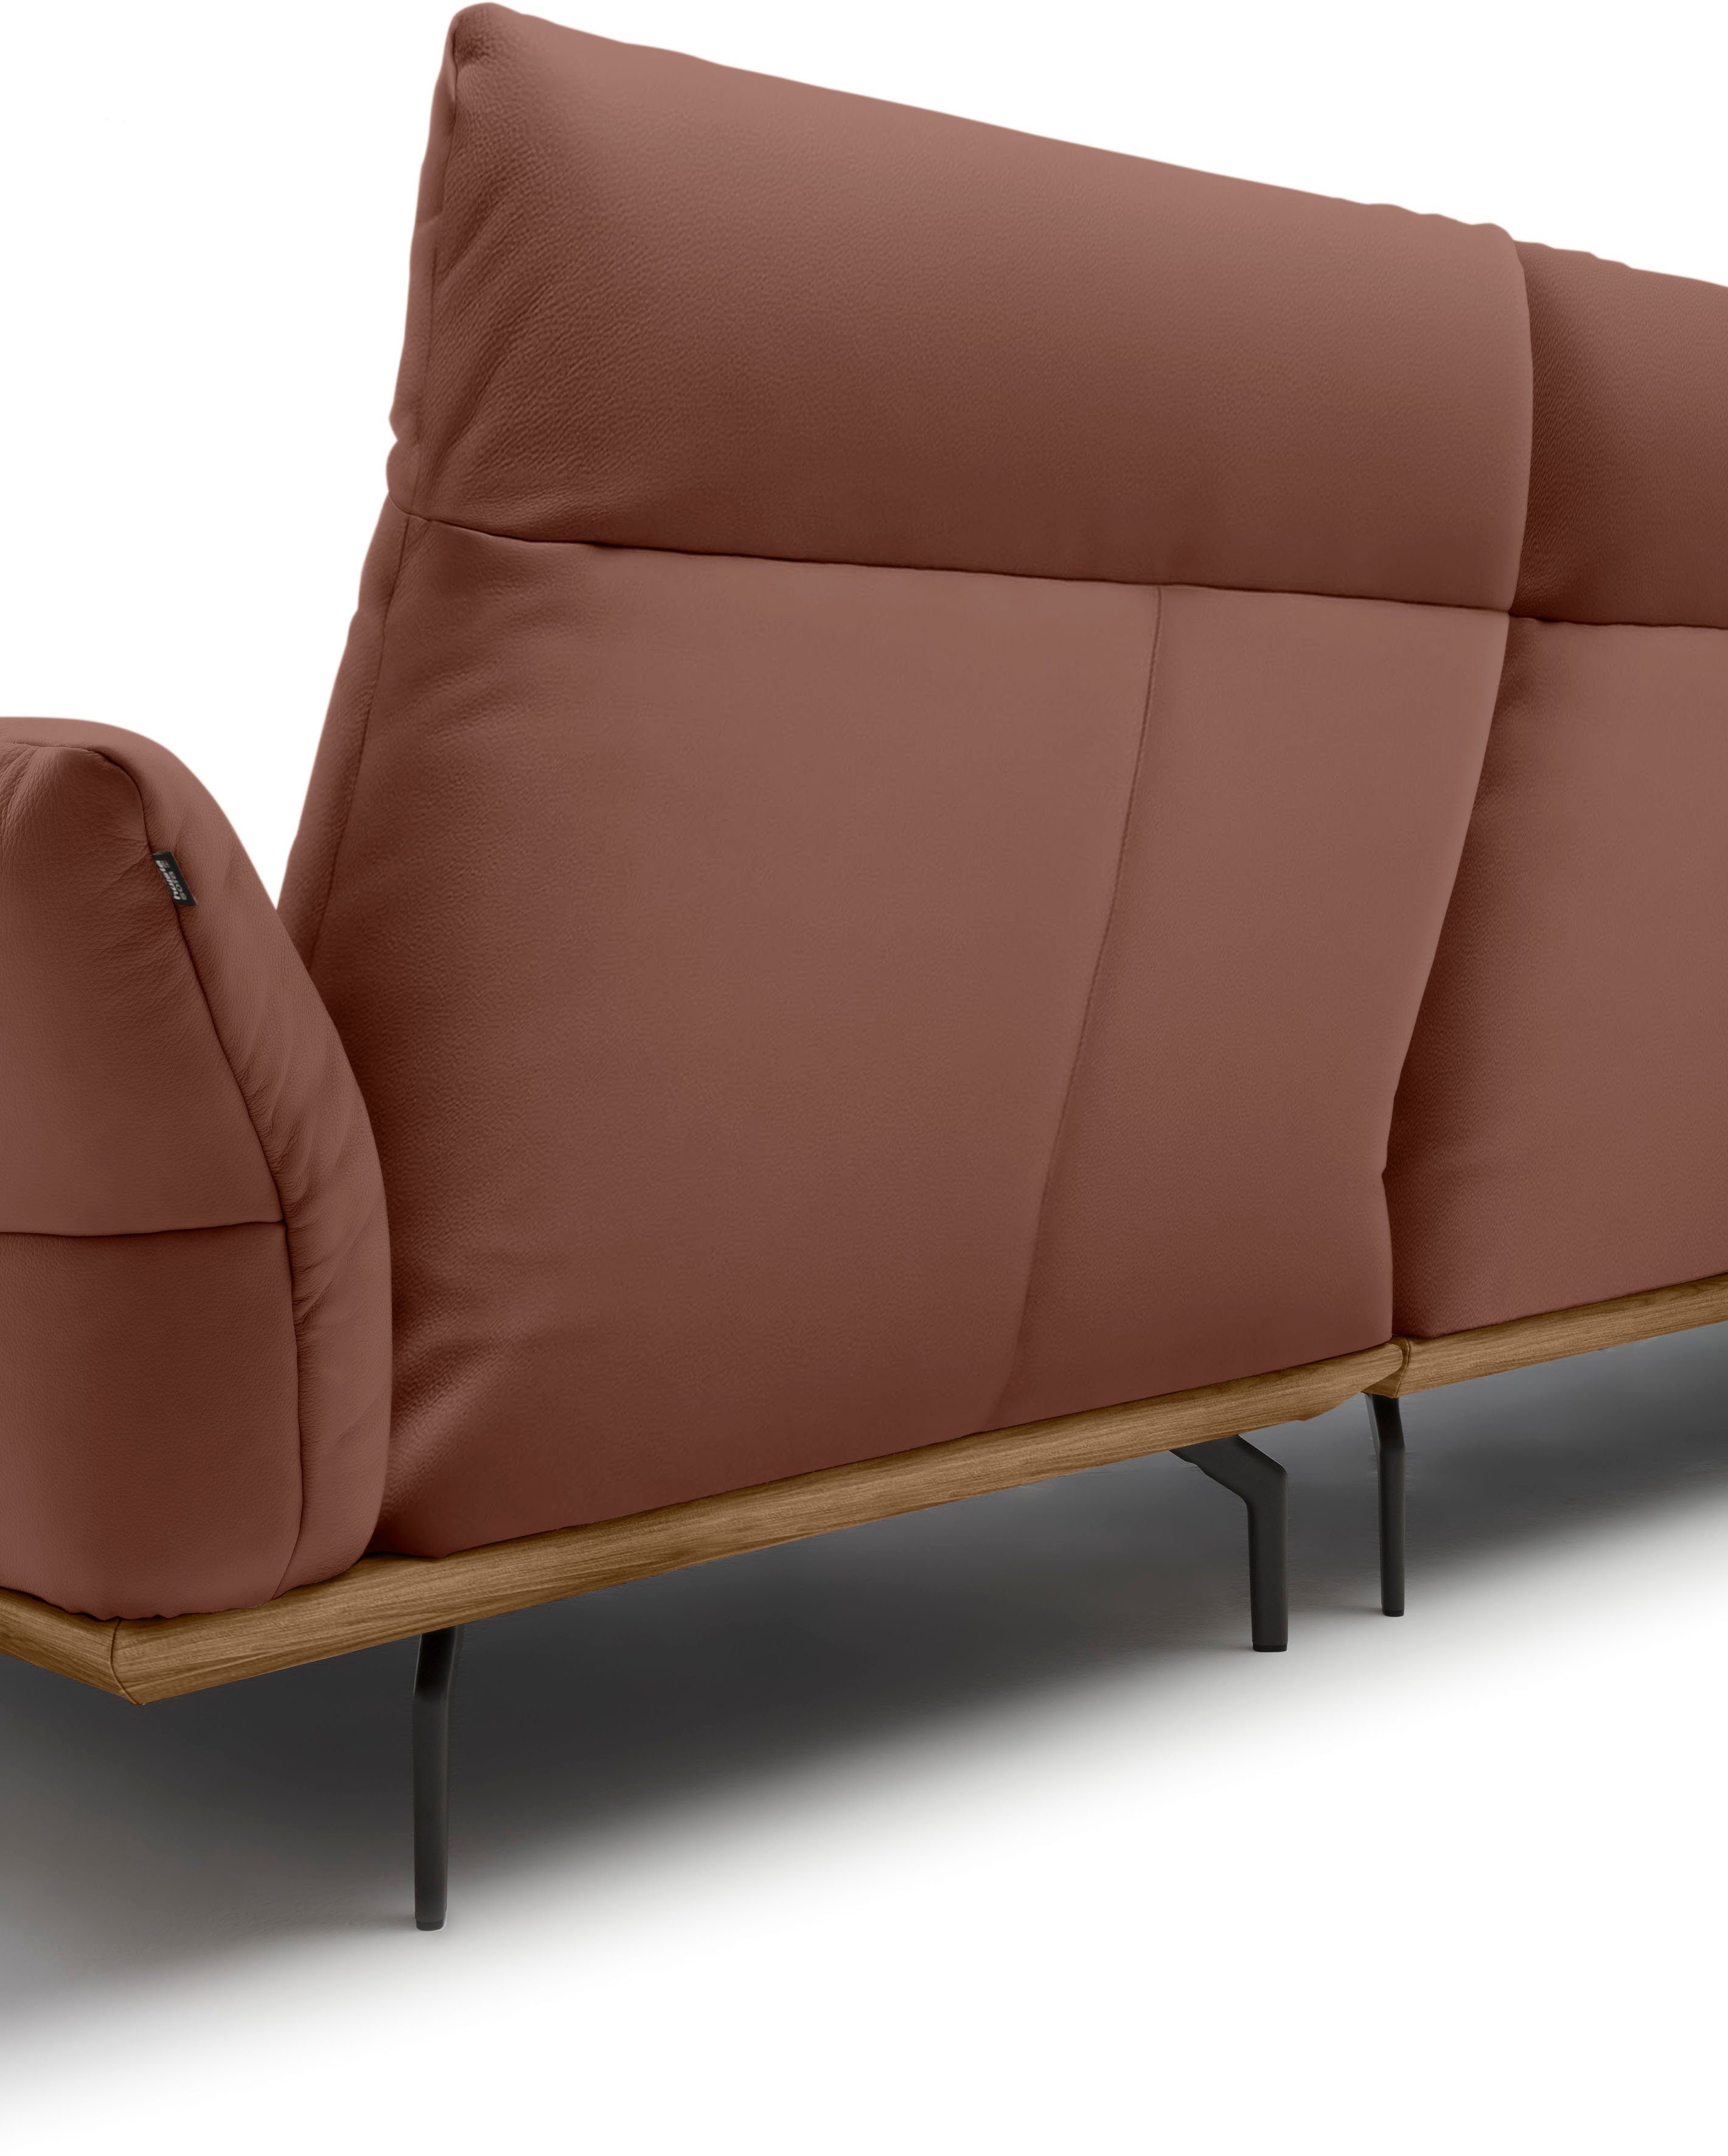 hülsta sofa Ecksofa hs.460, in Breite 298 cm Winkelfüße Sockel Nussbaum, Umbragrau, in